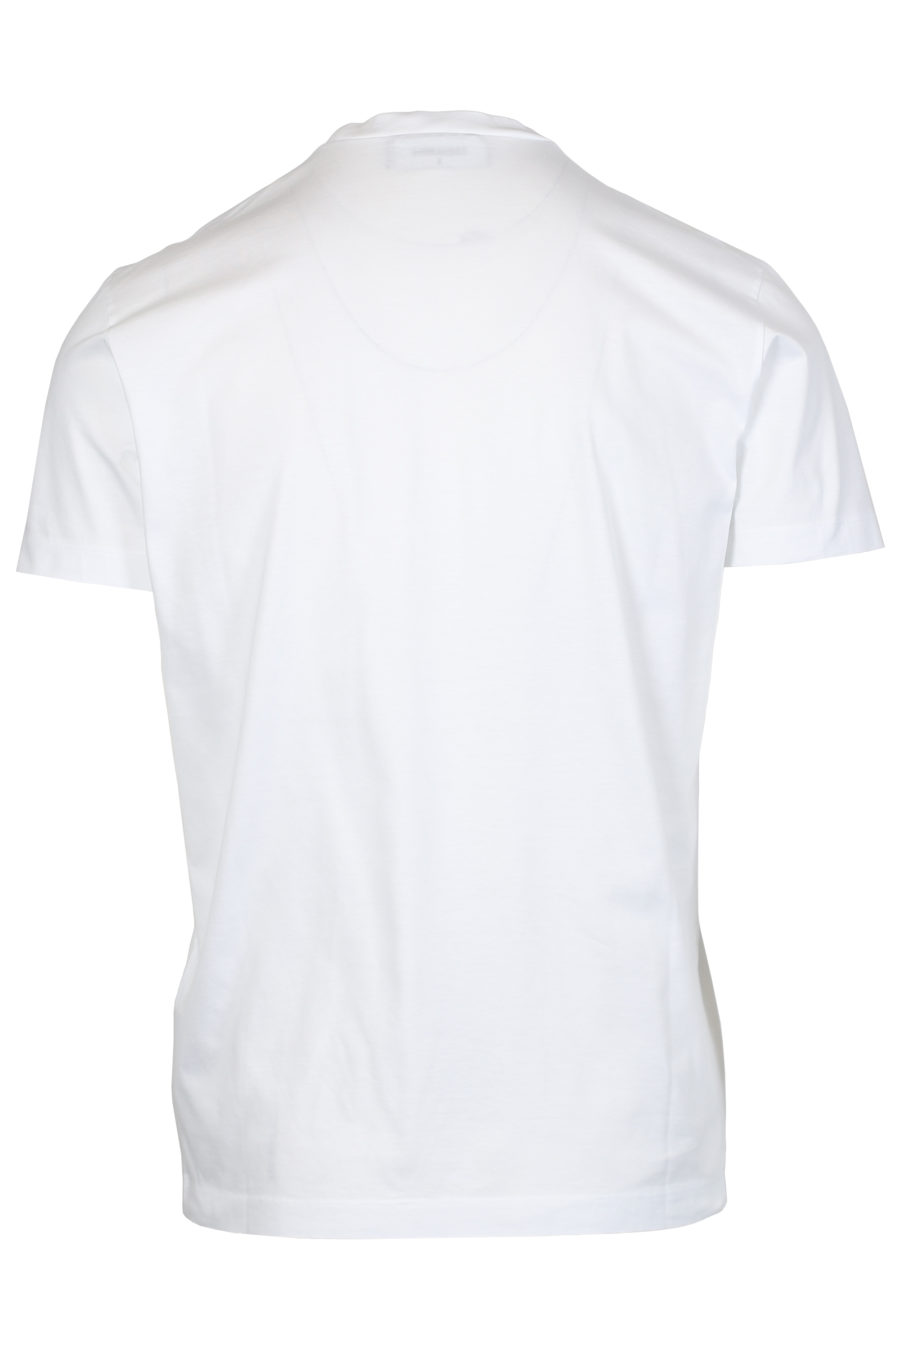 Camiseta blanca "Sweat and Tears" - IMG 2424